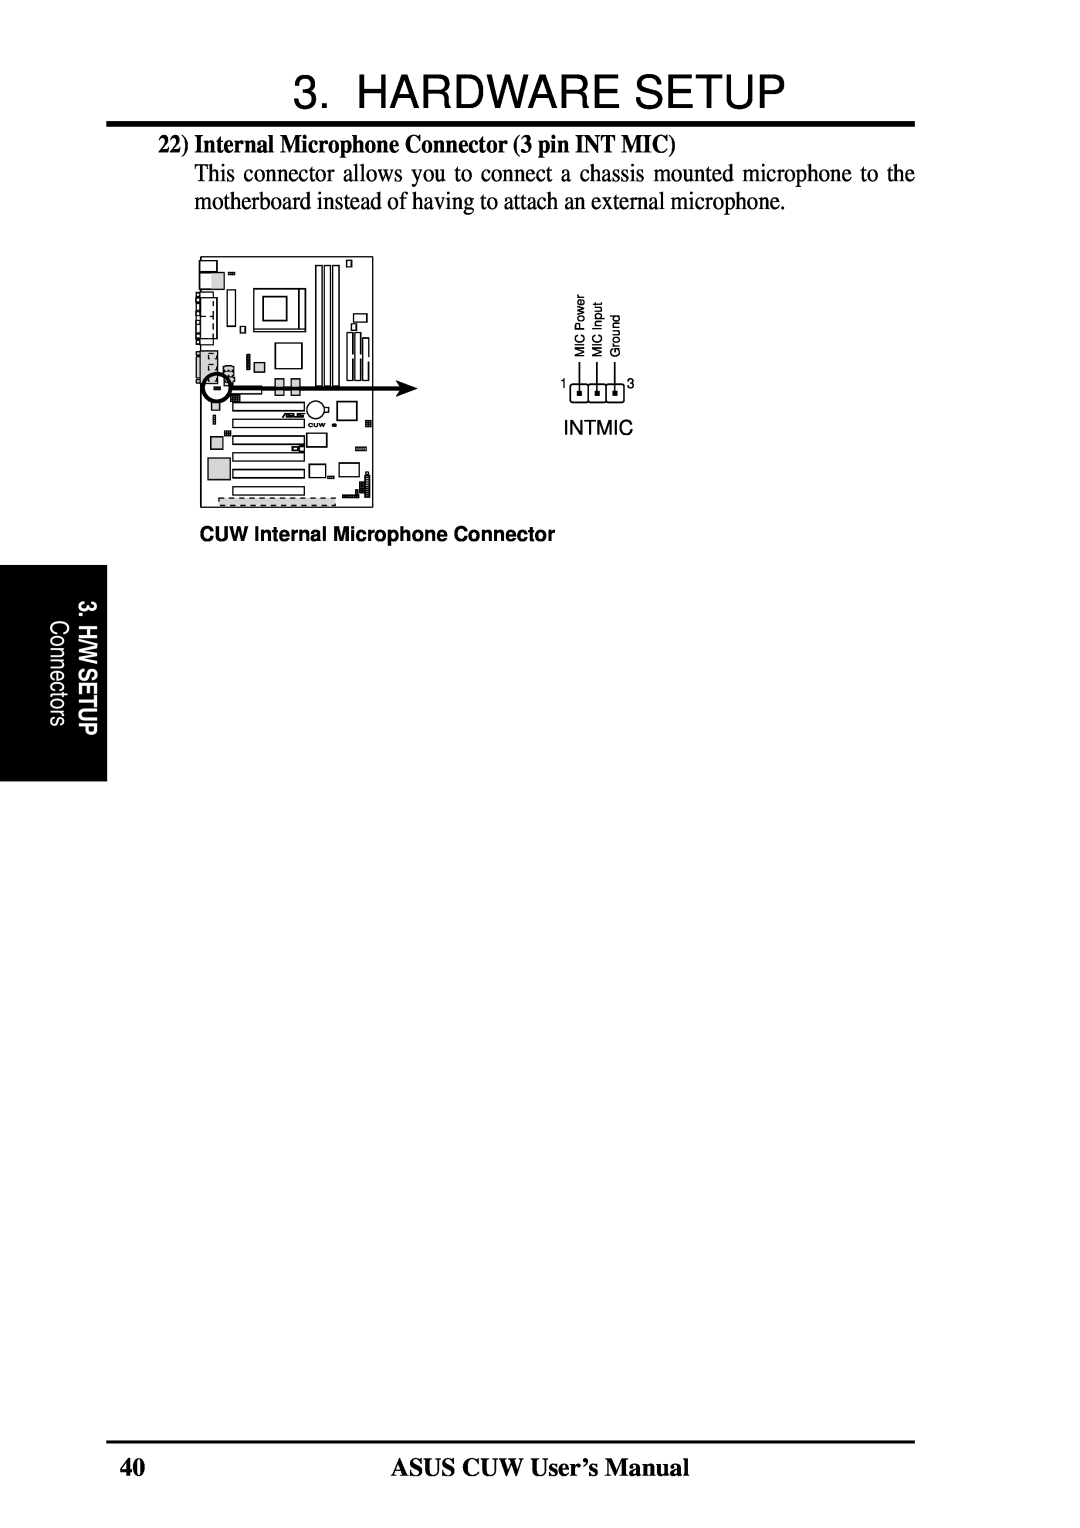 Asus 810 Internal Microphone Connector 3 pin INT MIC, Hardware Setup, ASUS CUW User’s Manual, Intmic, ConnectorsH/W SETUP 